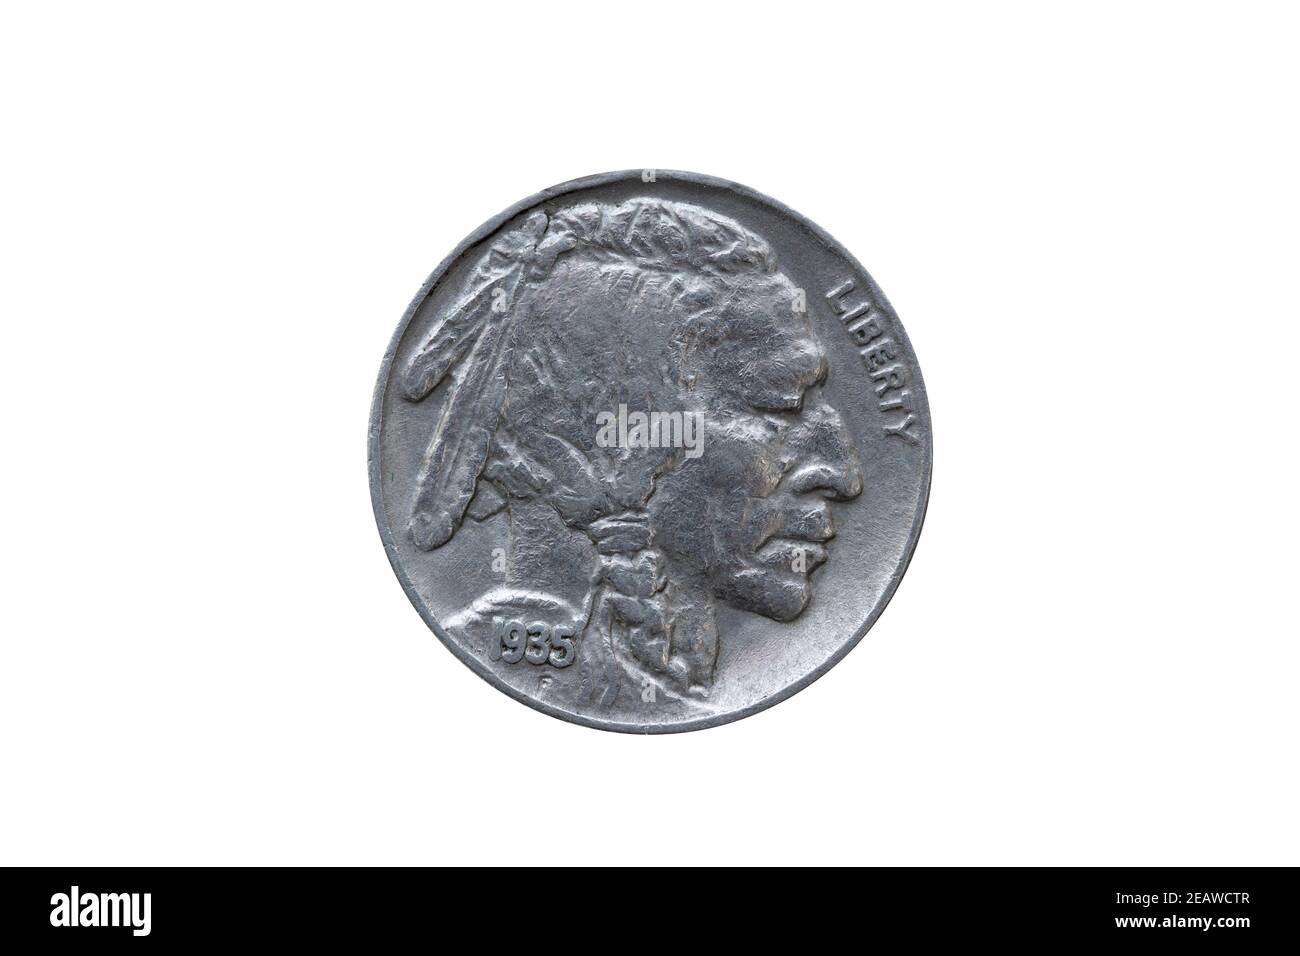 USA five cents Buffalo Indian Head nickel coin Stock Photo